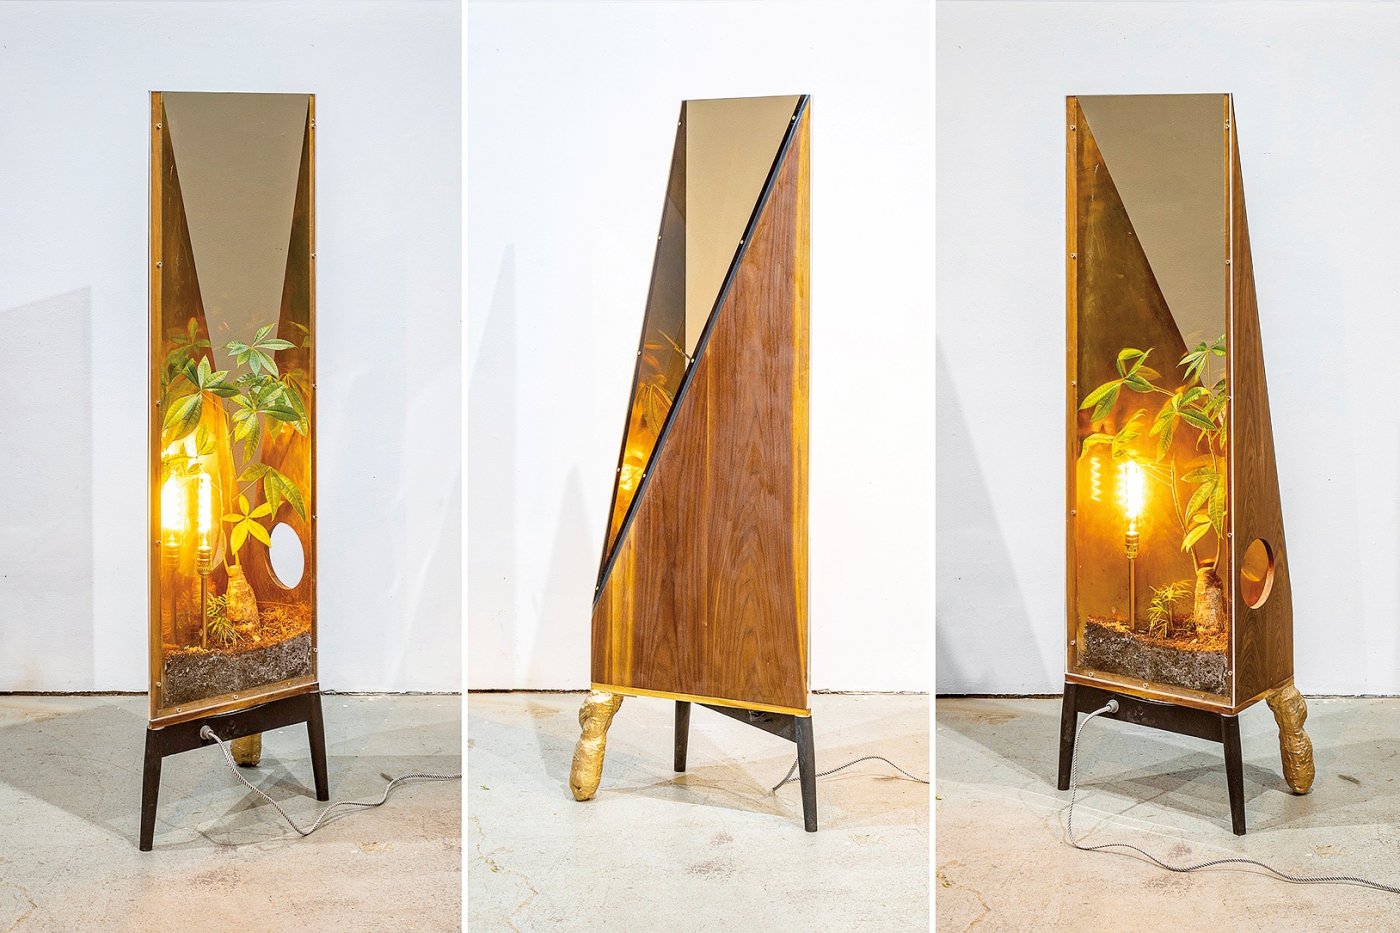 Vintage furniture made of walnut, plexiglass, brass, plants, cast aluminum and light.